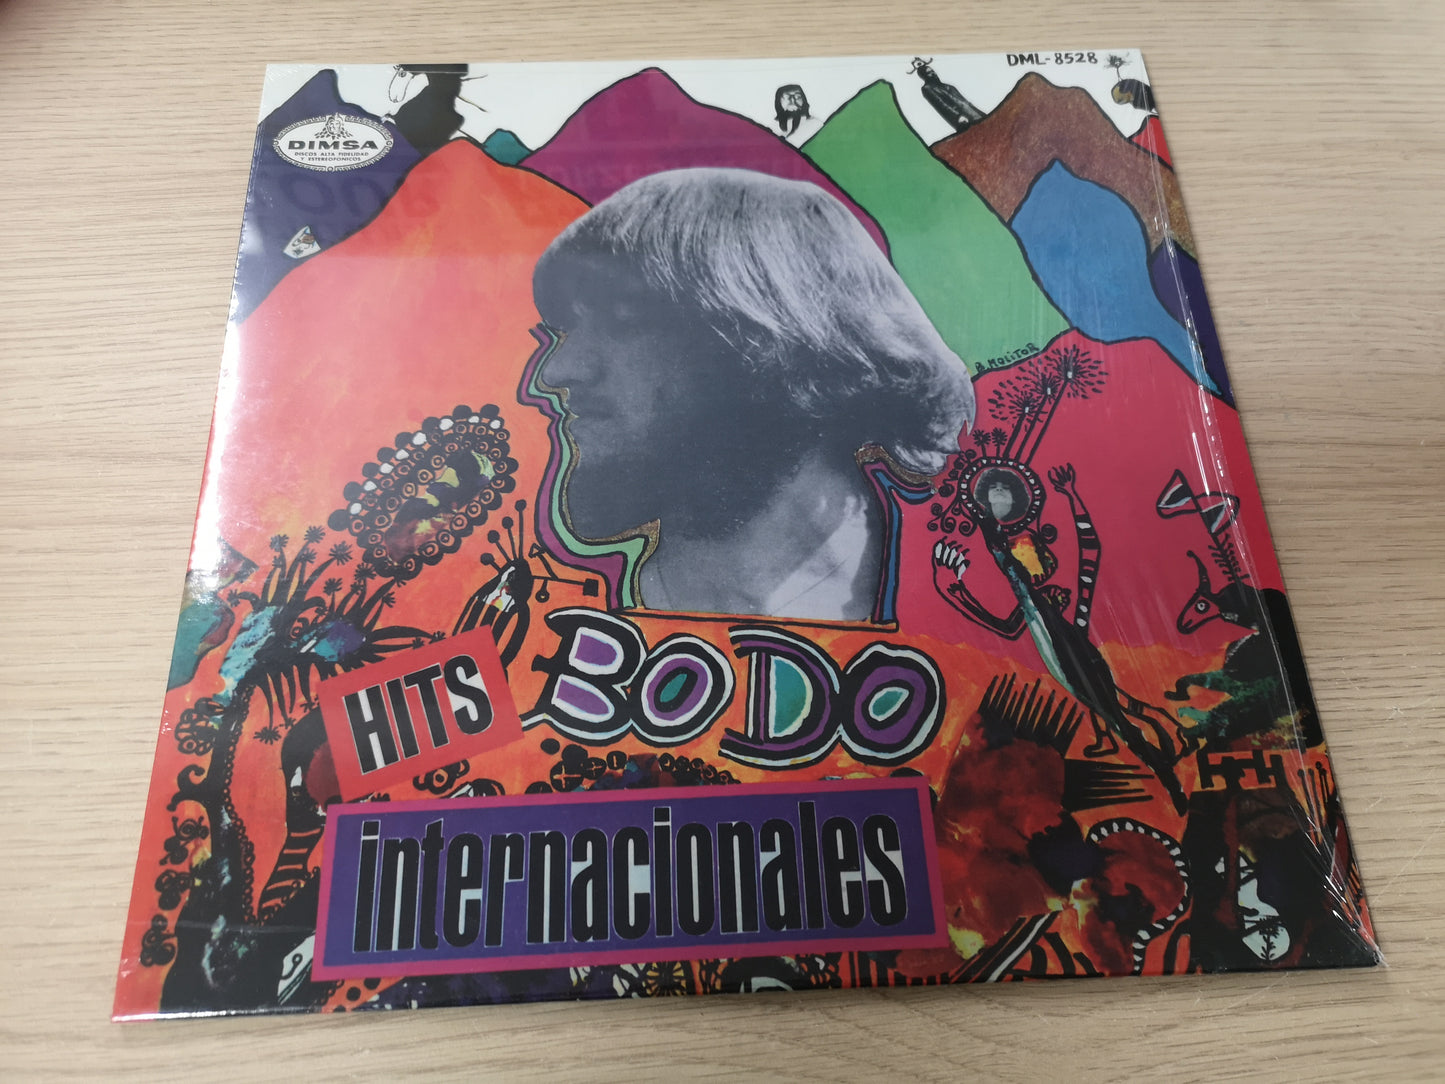 Bodo "Hits Internacionales" RE Shadoks (+ 1 Red Vinyl EP) SEALED